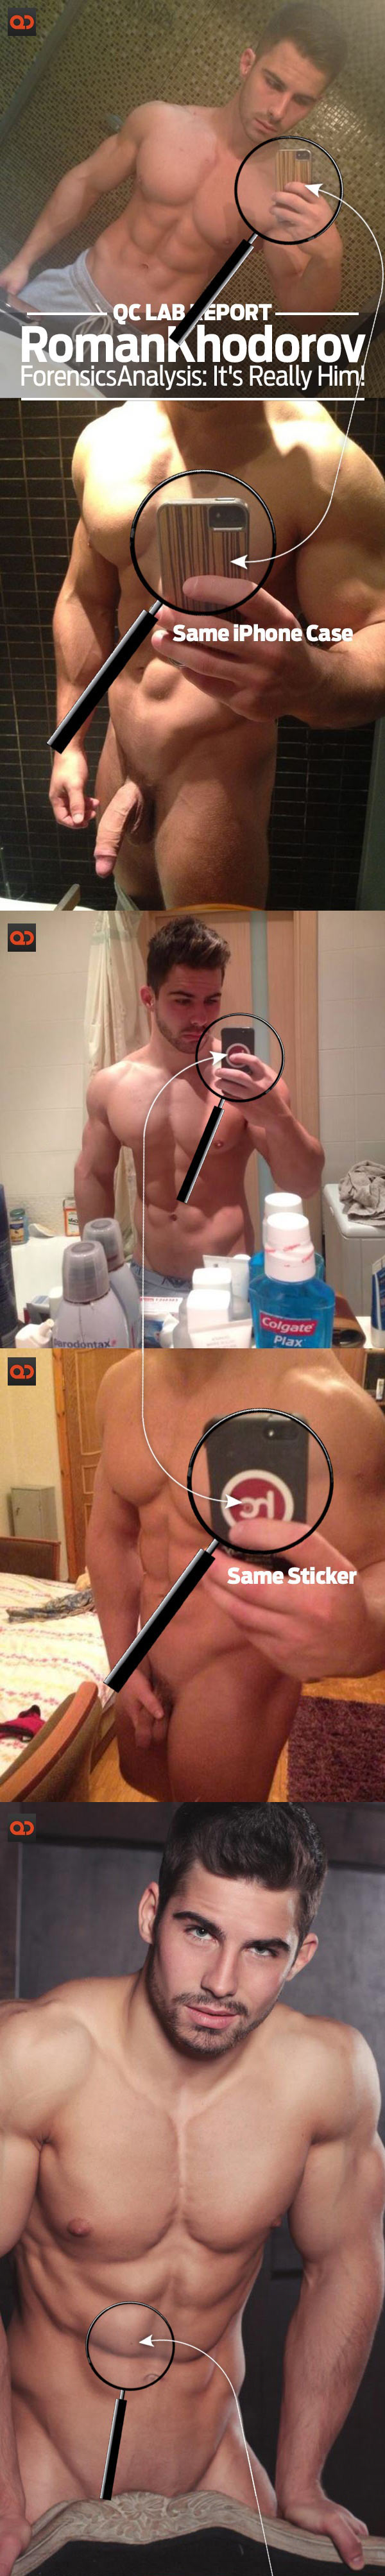 QC Lab Report: Roman Khodorov Leaked Nude Pics, It's Really Him!